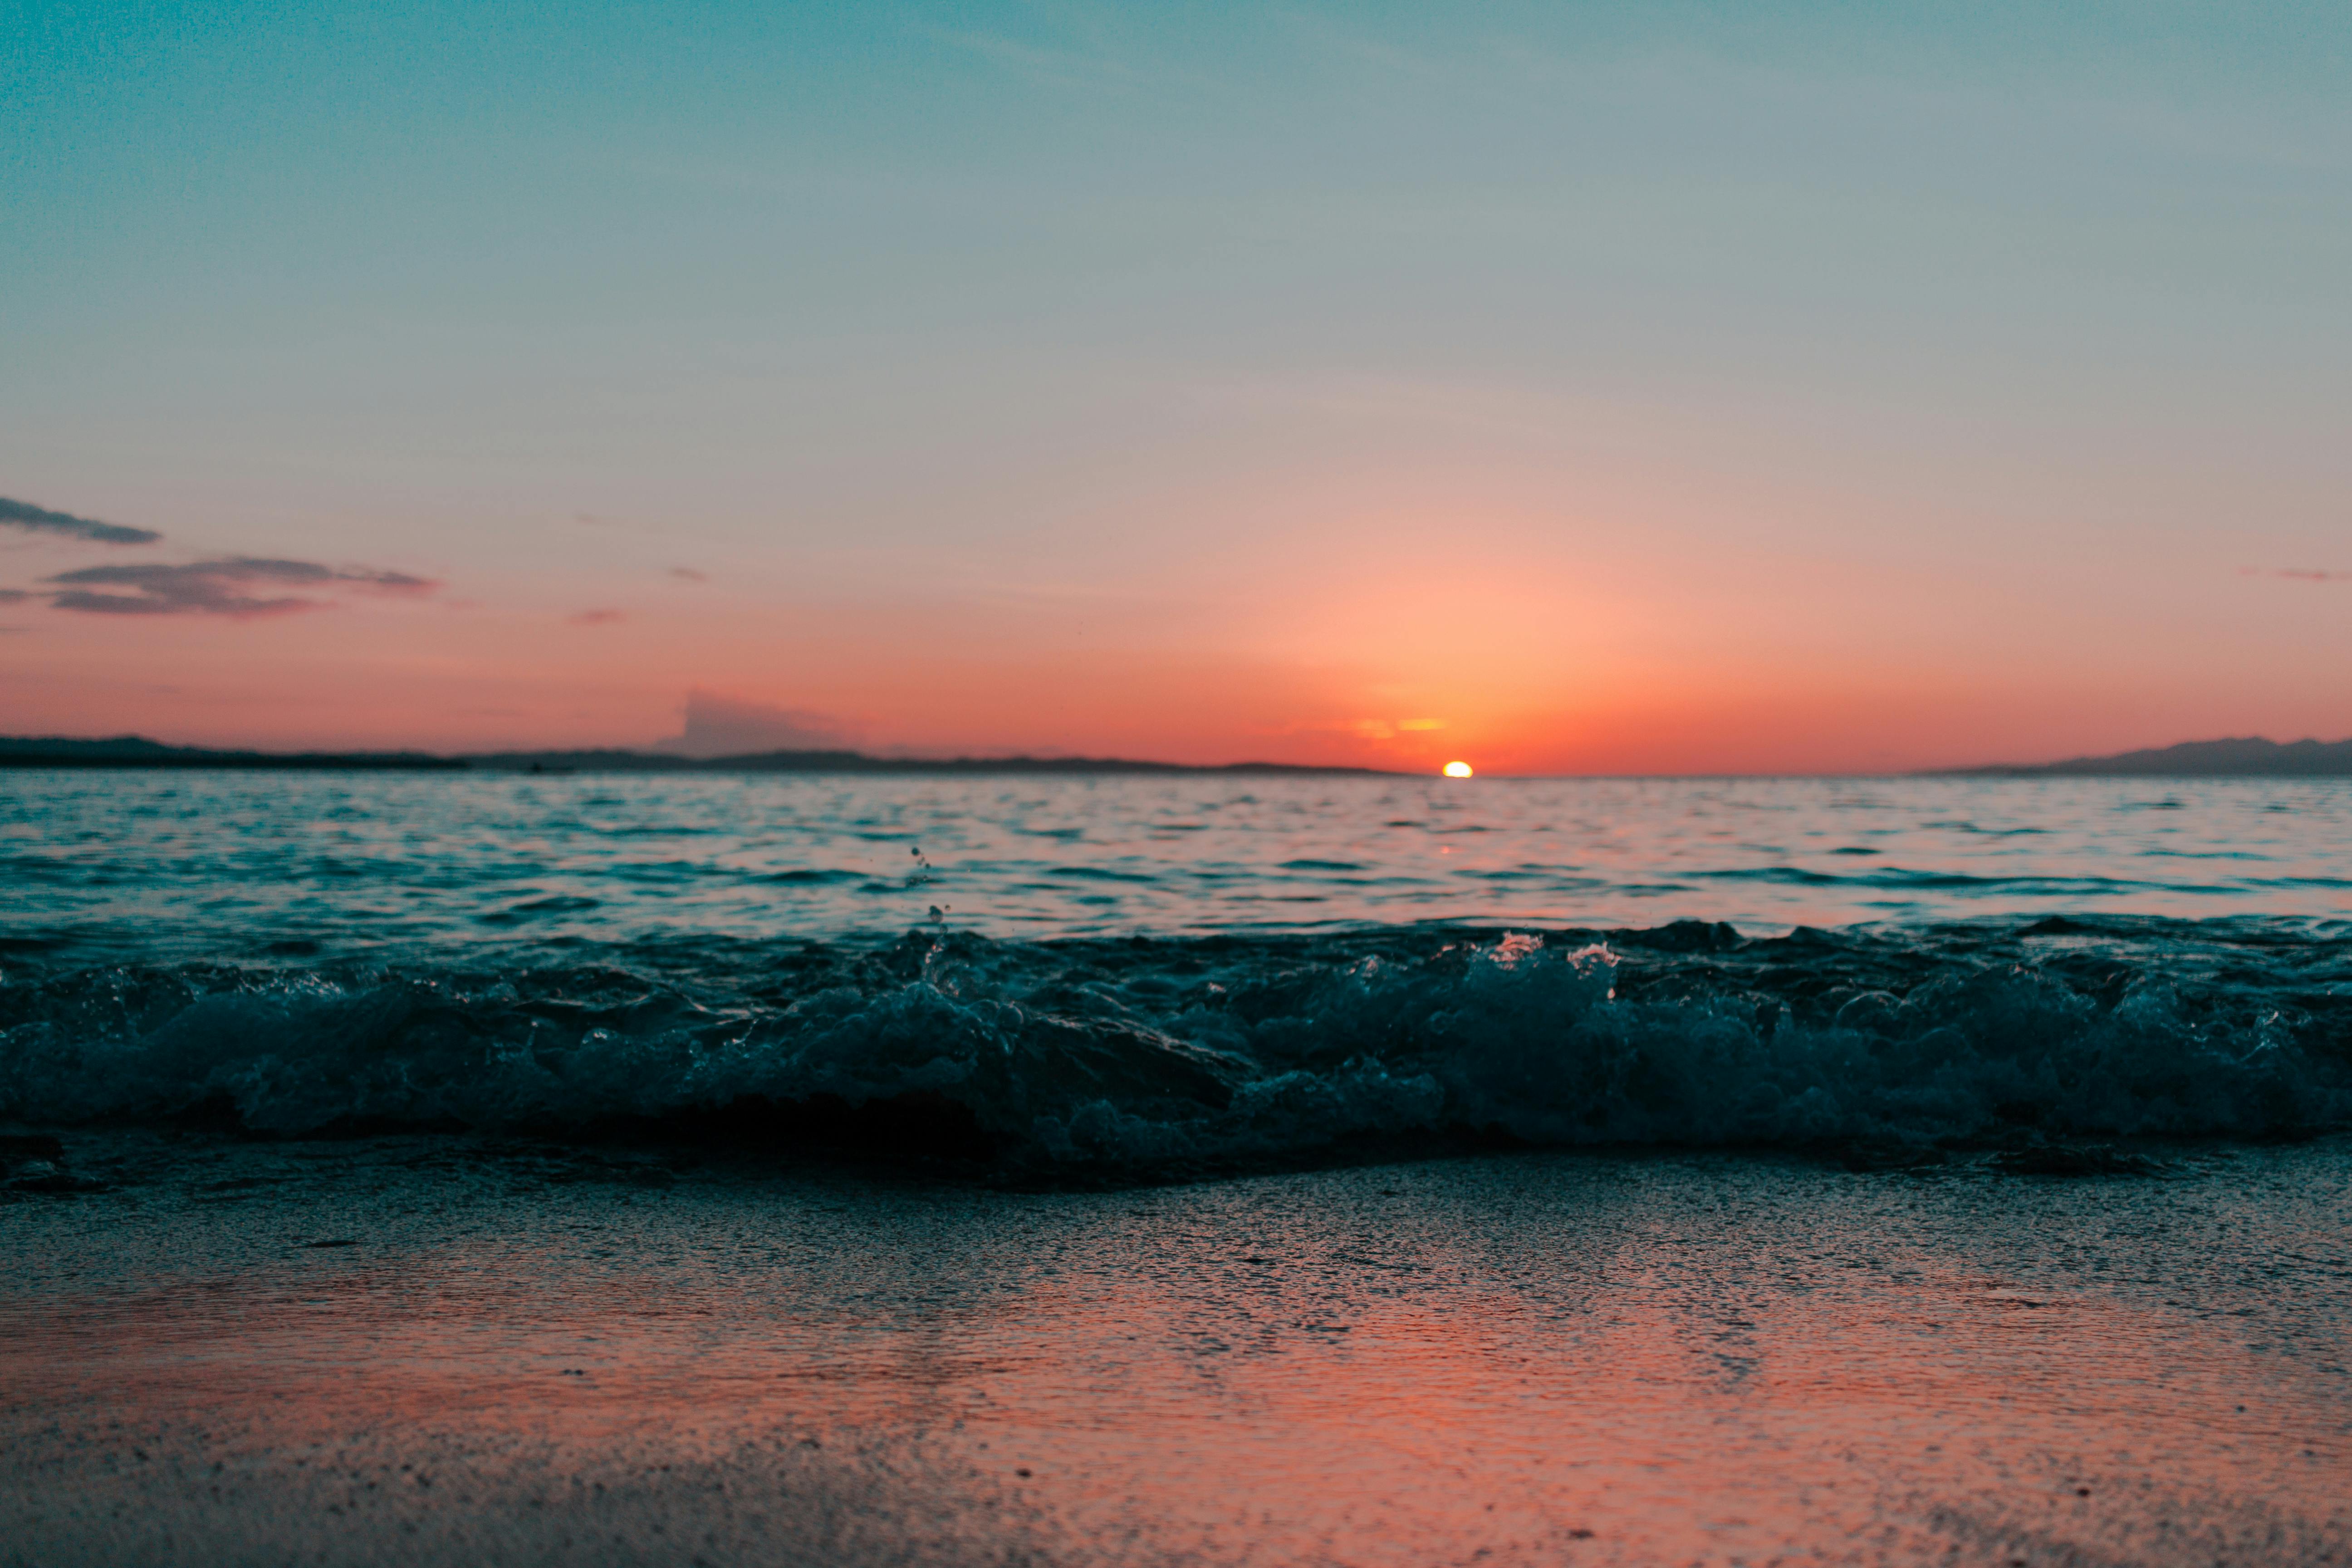 ocean sunset photography